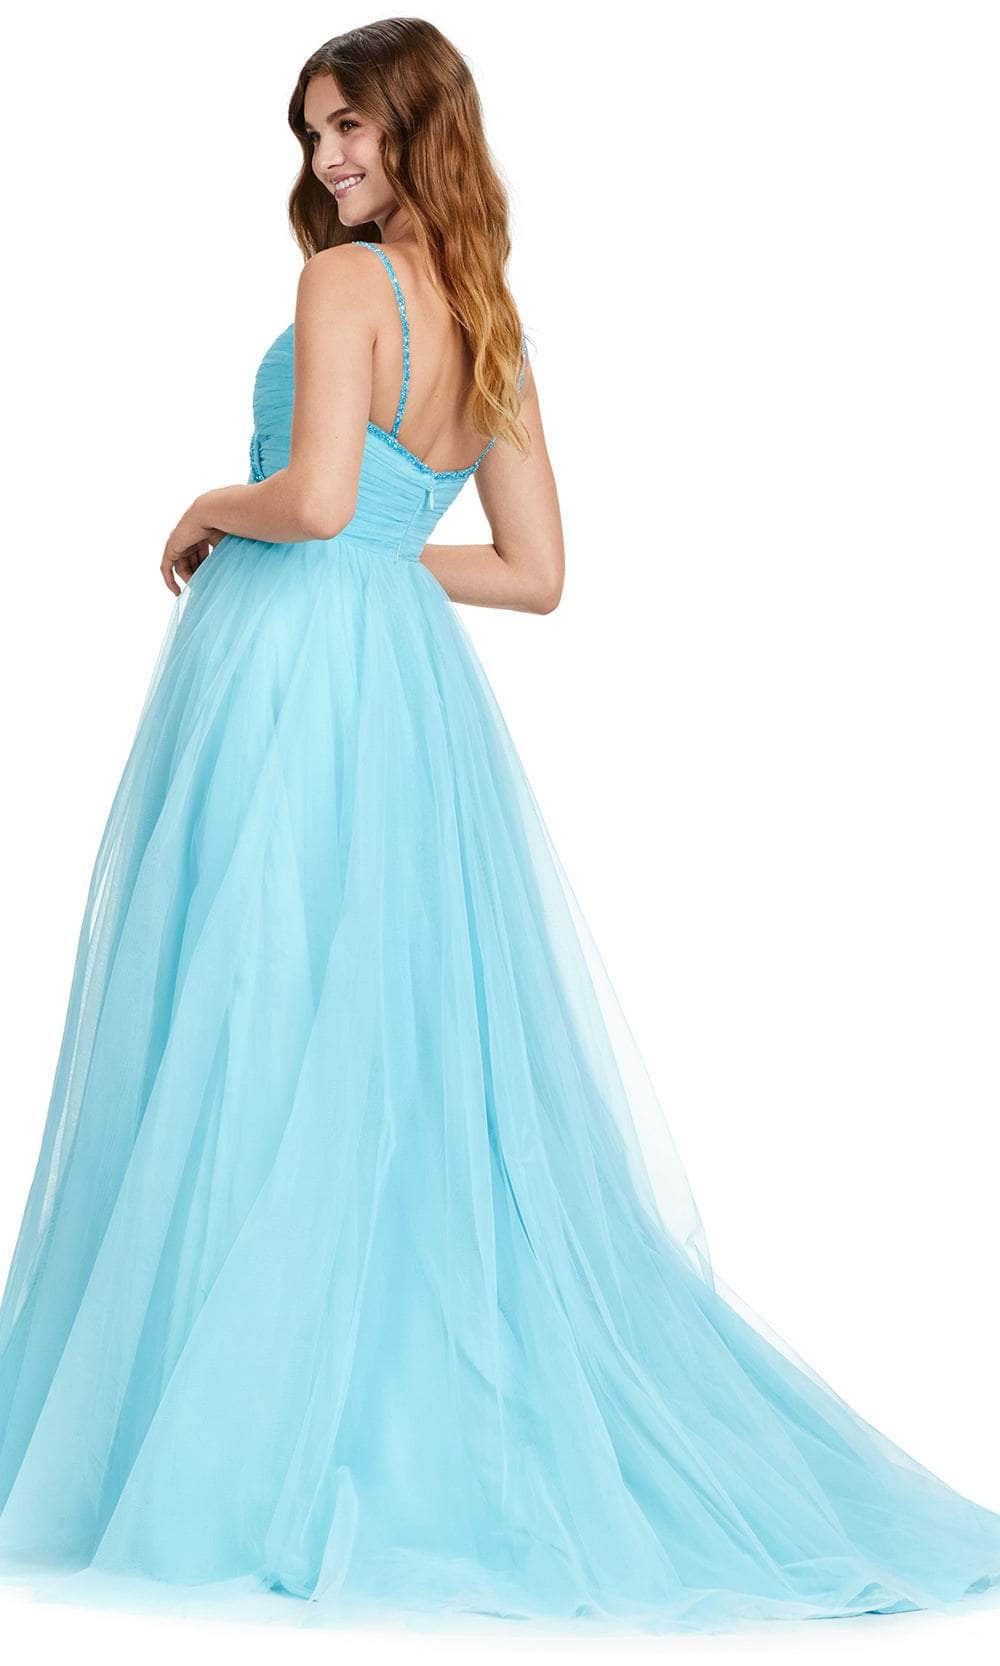 Ashley Lauren 11461 - Beaded Trim Prom Dress Prom Dresses